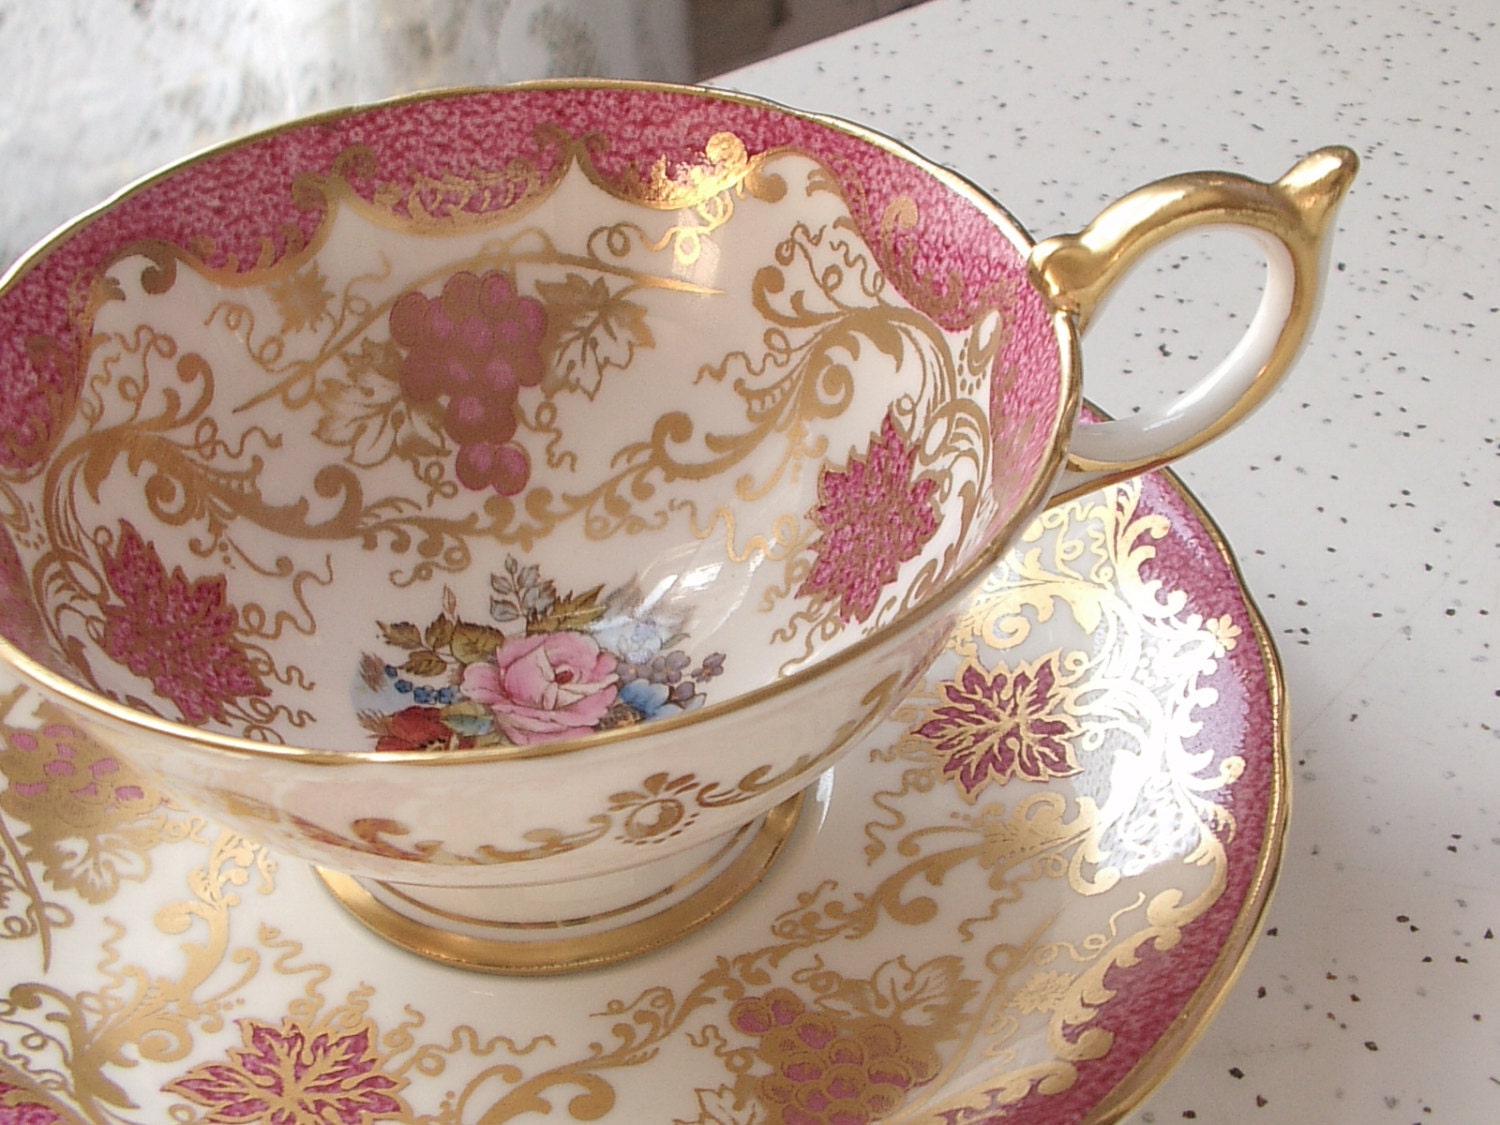 cup by cup pink vintage and antique ShoponSherman set  vintage saucer and tea saucer